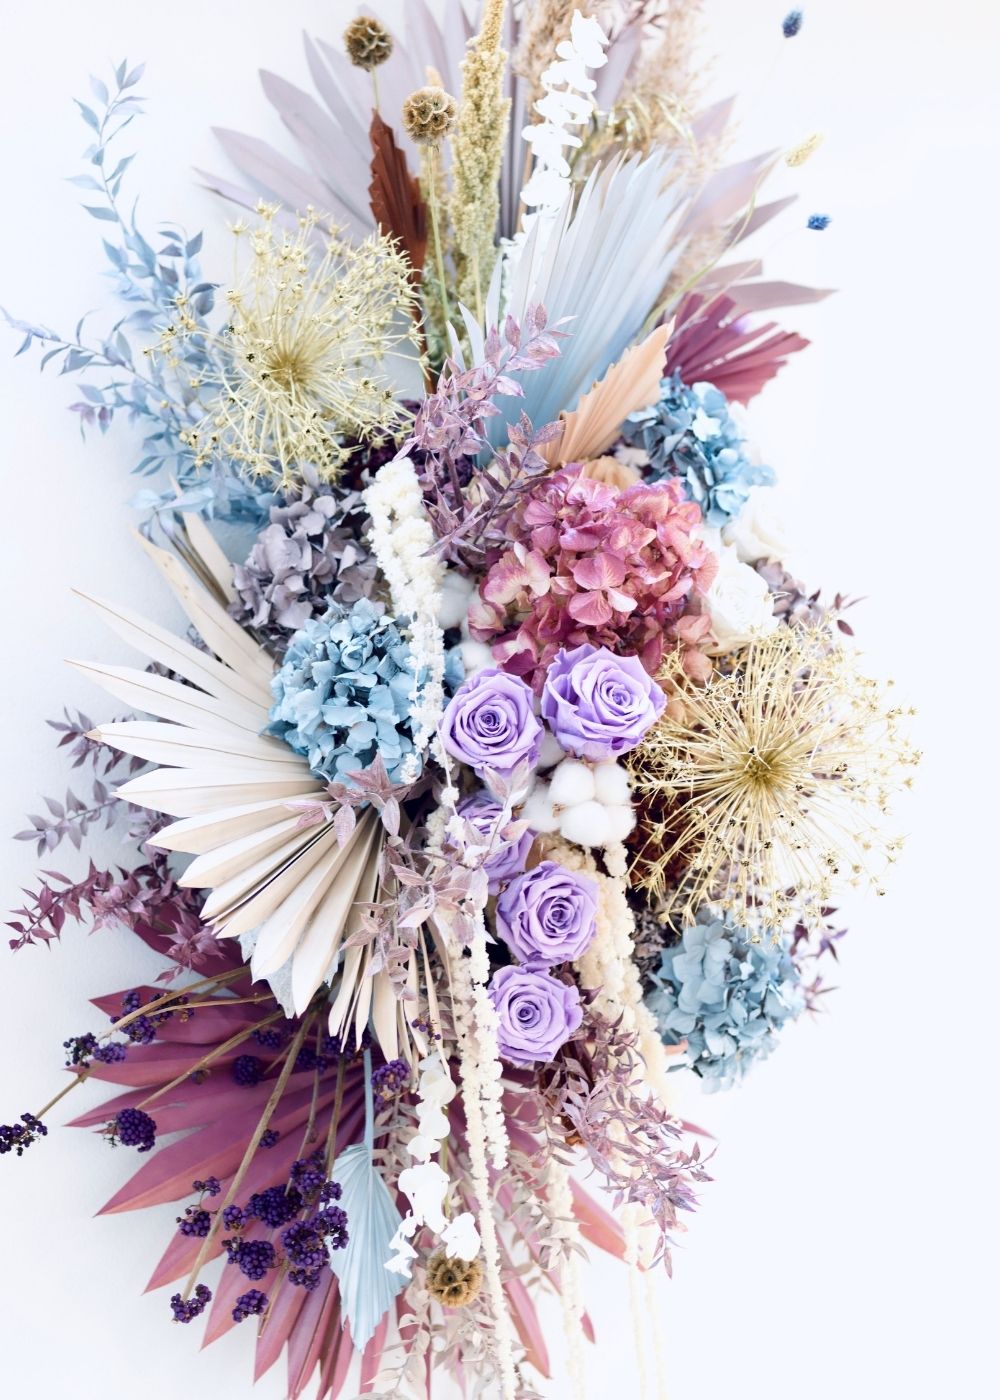 Dried flower design by Katya Hutter - On Thursd.